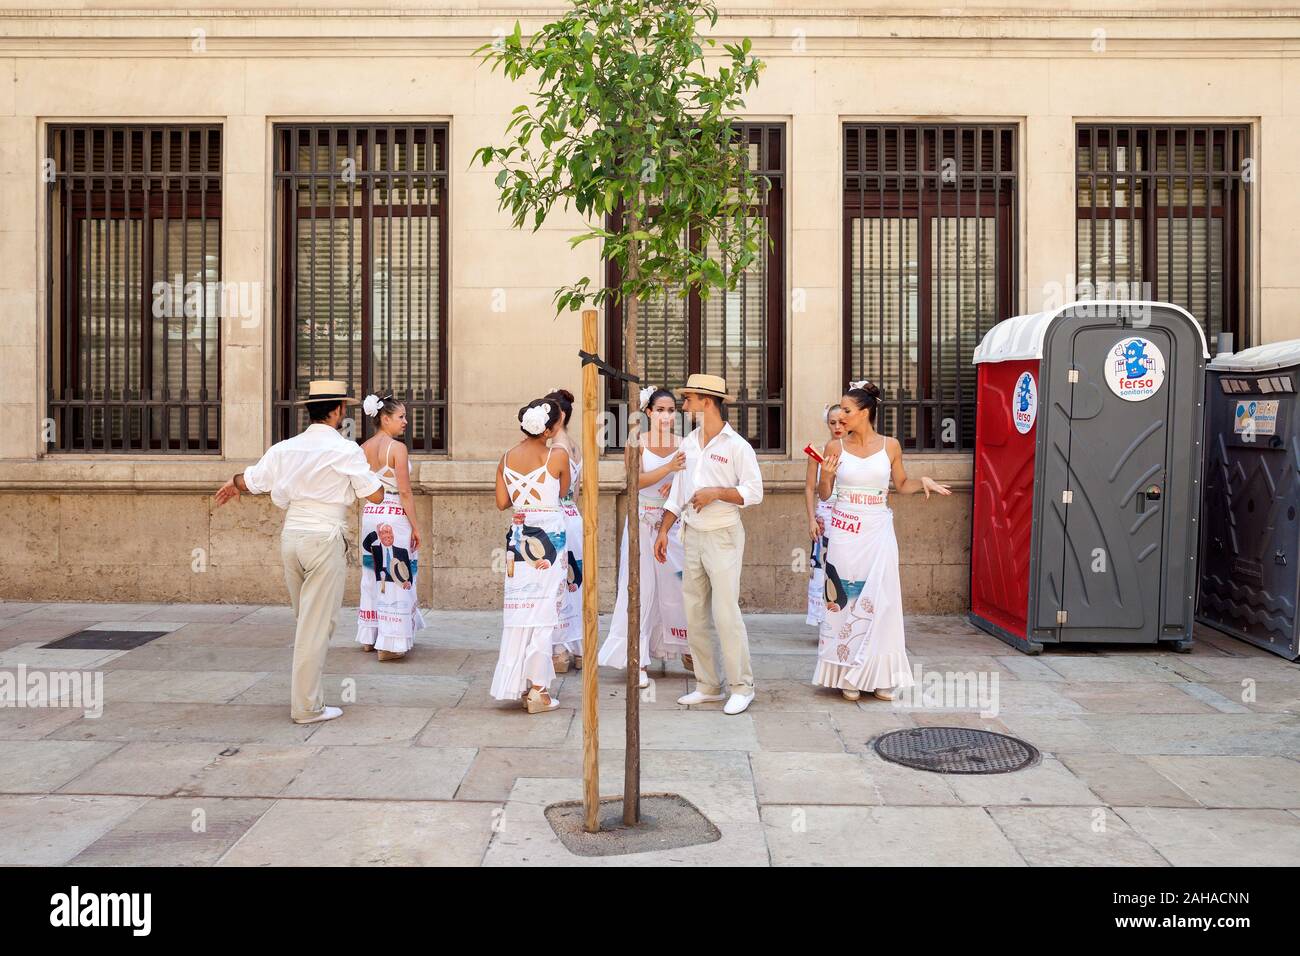 15.08.2018, Malaga, Andalusien, Spanien - Paare in Kostümen nebenher ein Tanz in Malaga. 00 P 180815 D 514 CAROEX.JPG [MODEL RELEASE: NEIN PROPERTY RELEASE: Stockfoto